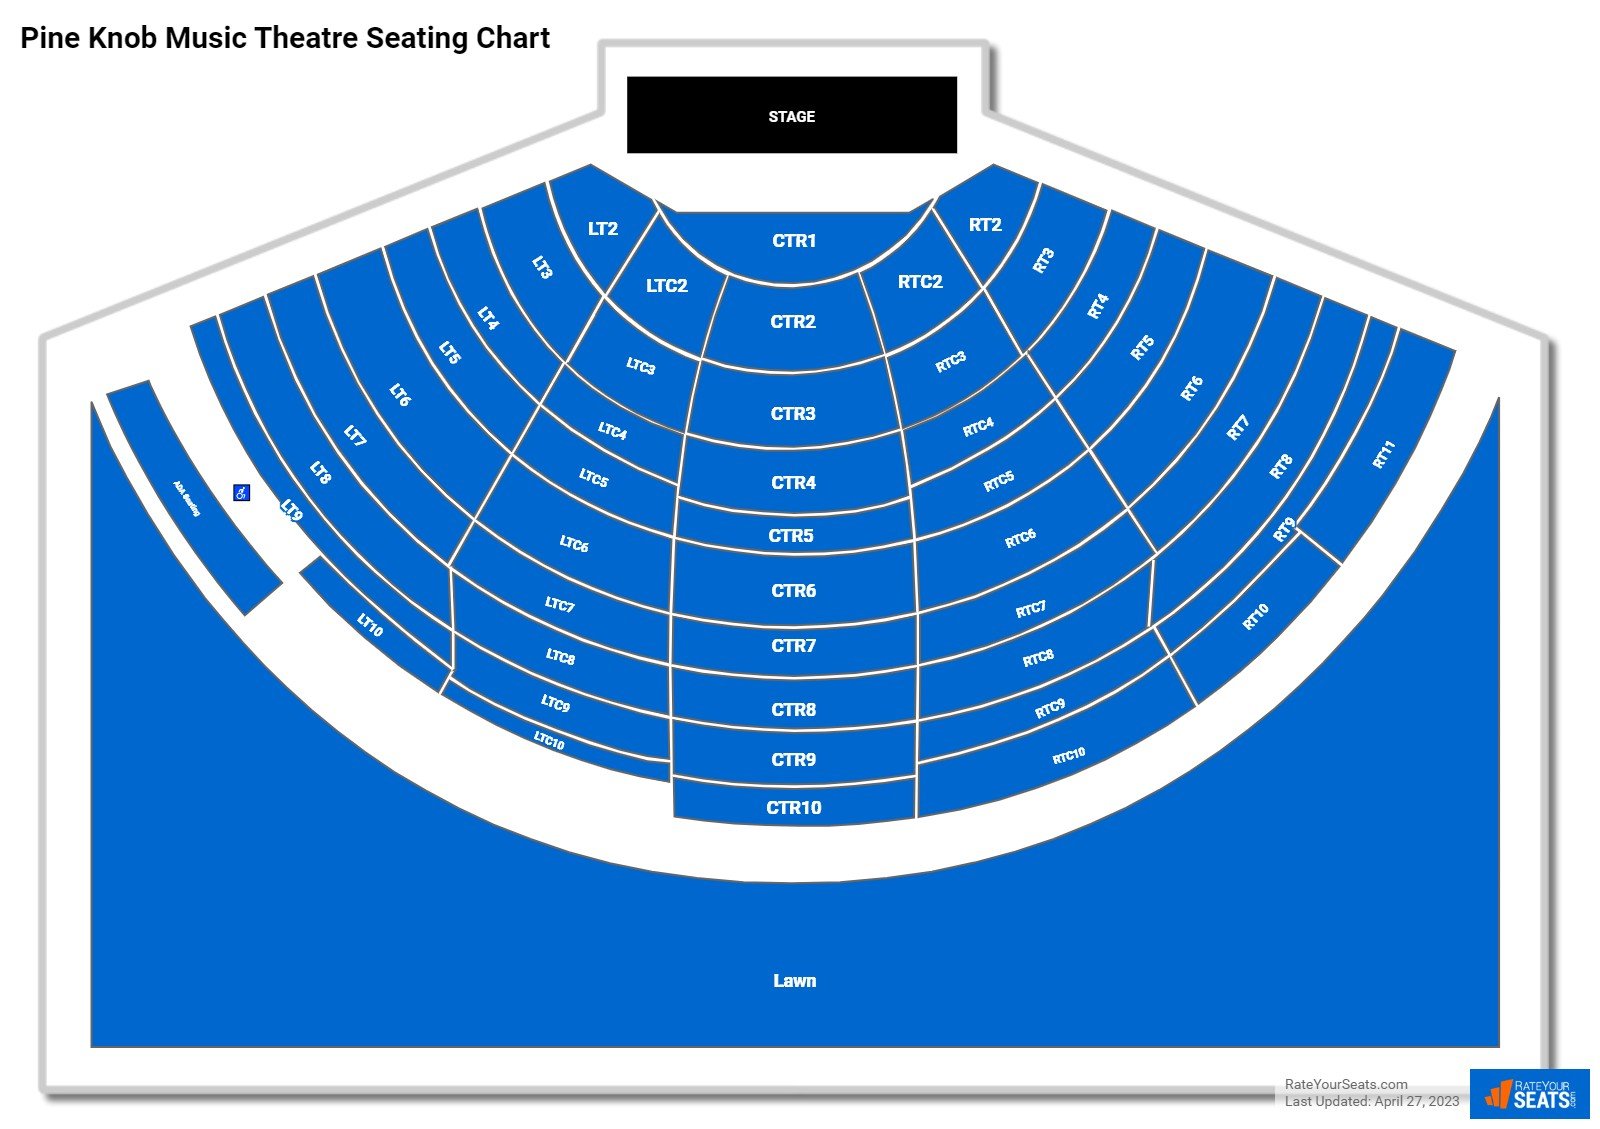 Pine Knob Music Theatre Concert Seating Chart